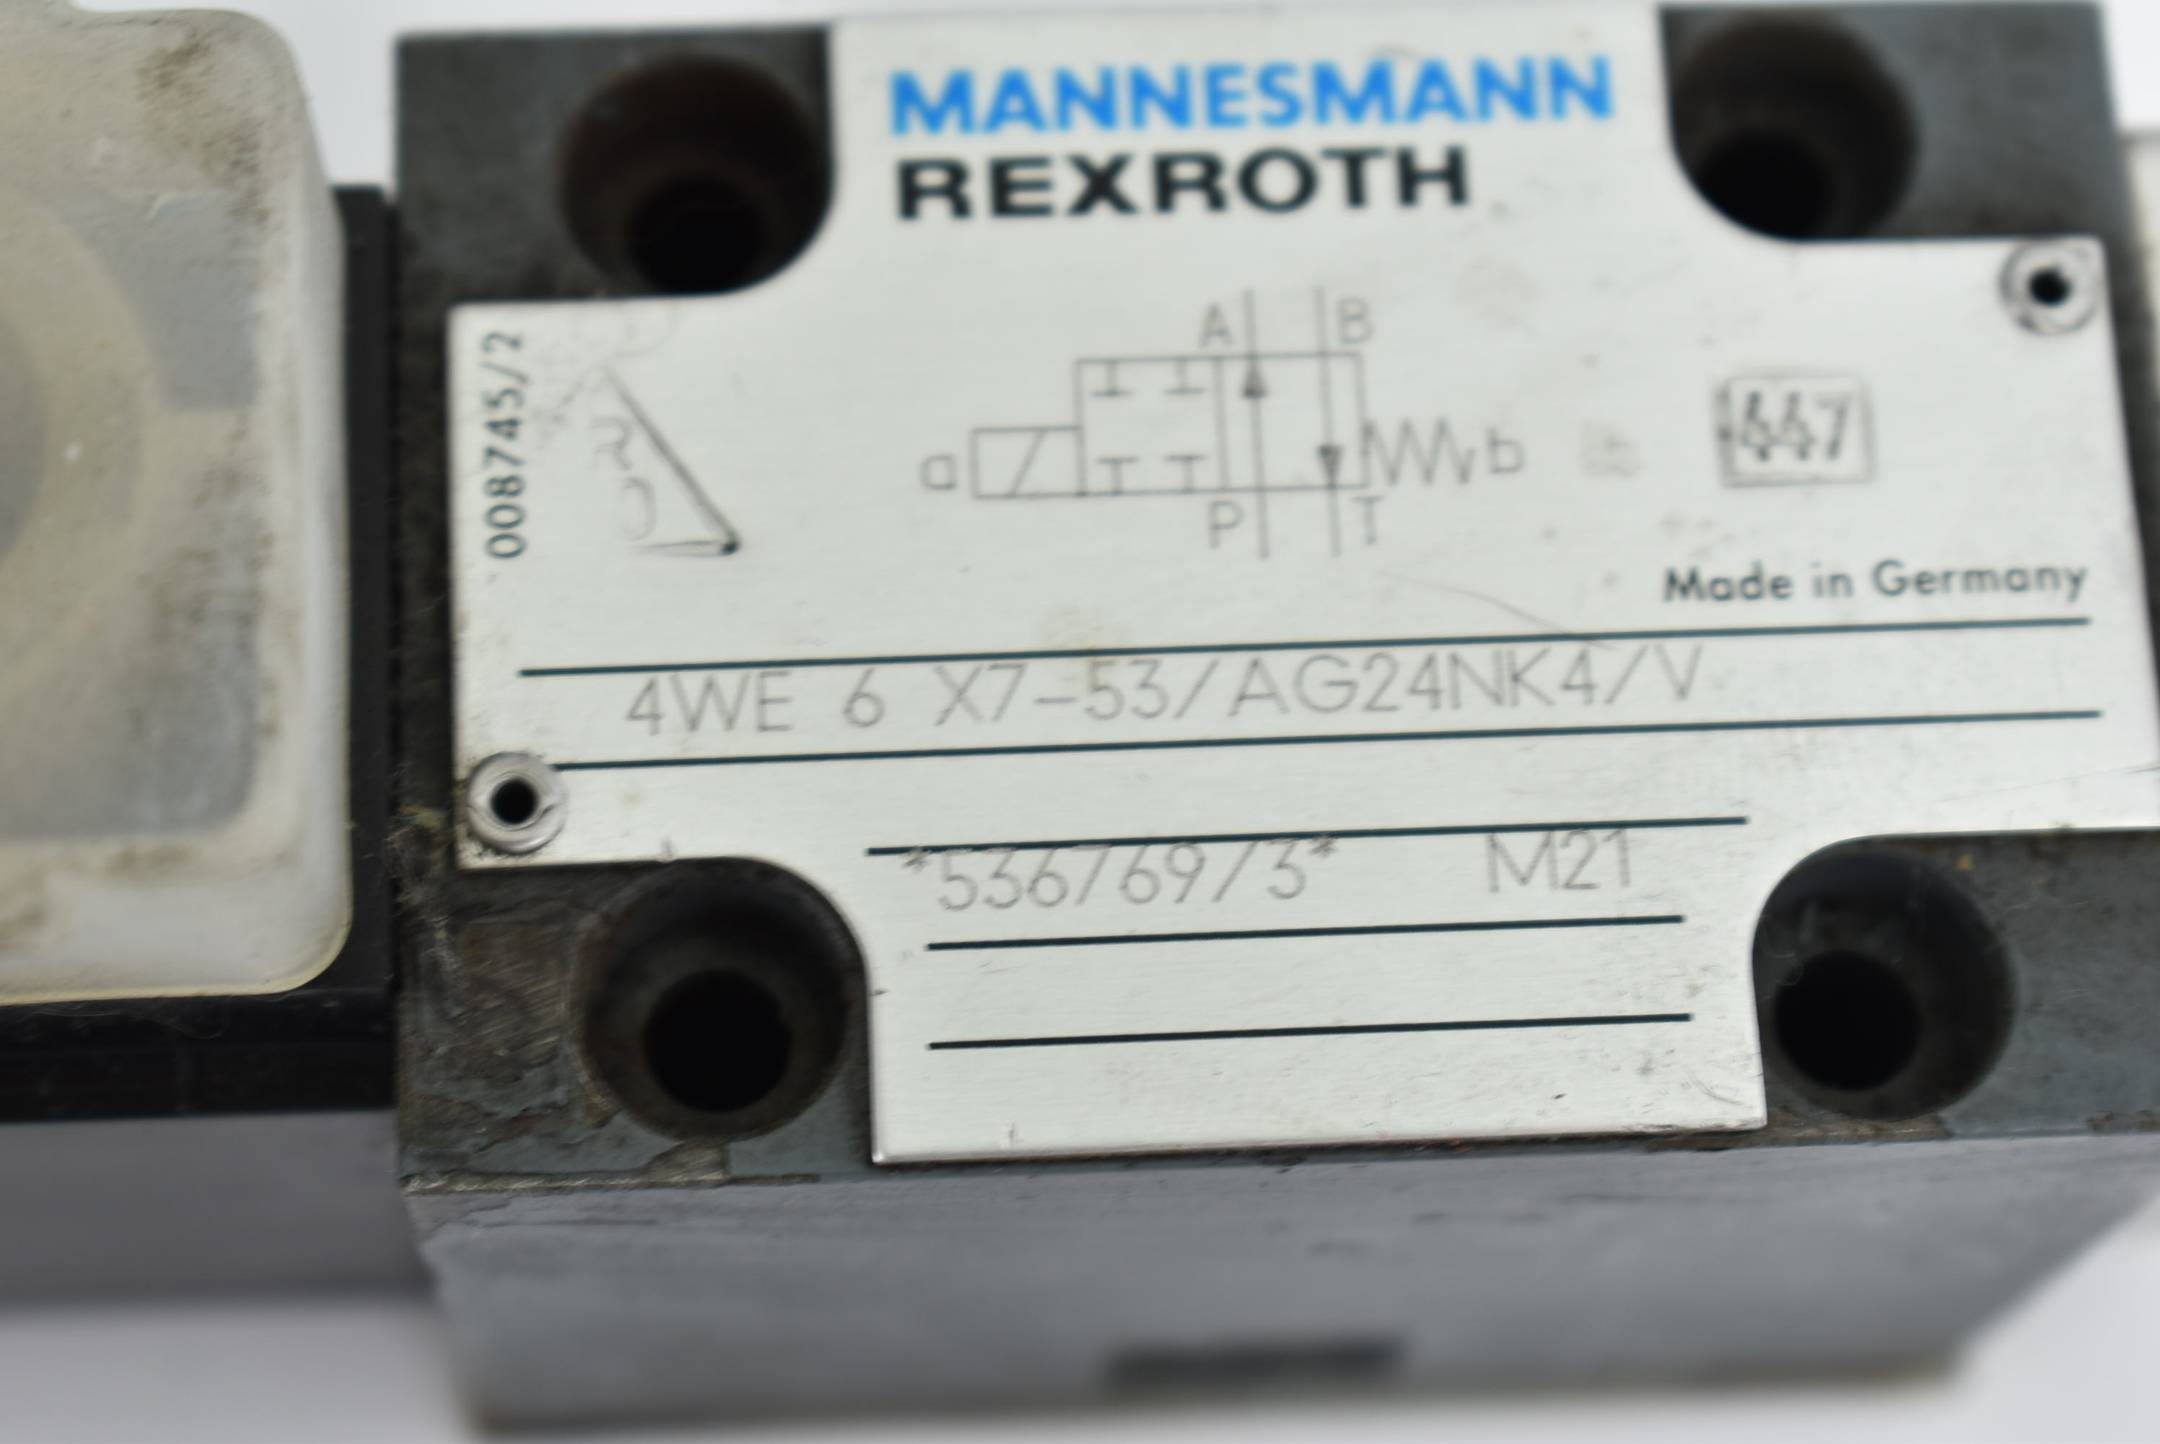 Rexroth Ventil 4WE 6 X7-53/AG24NK4/V ( 53676973 )